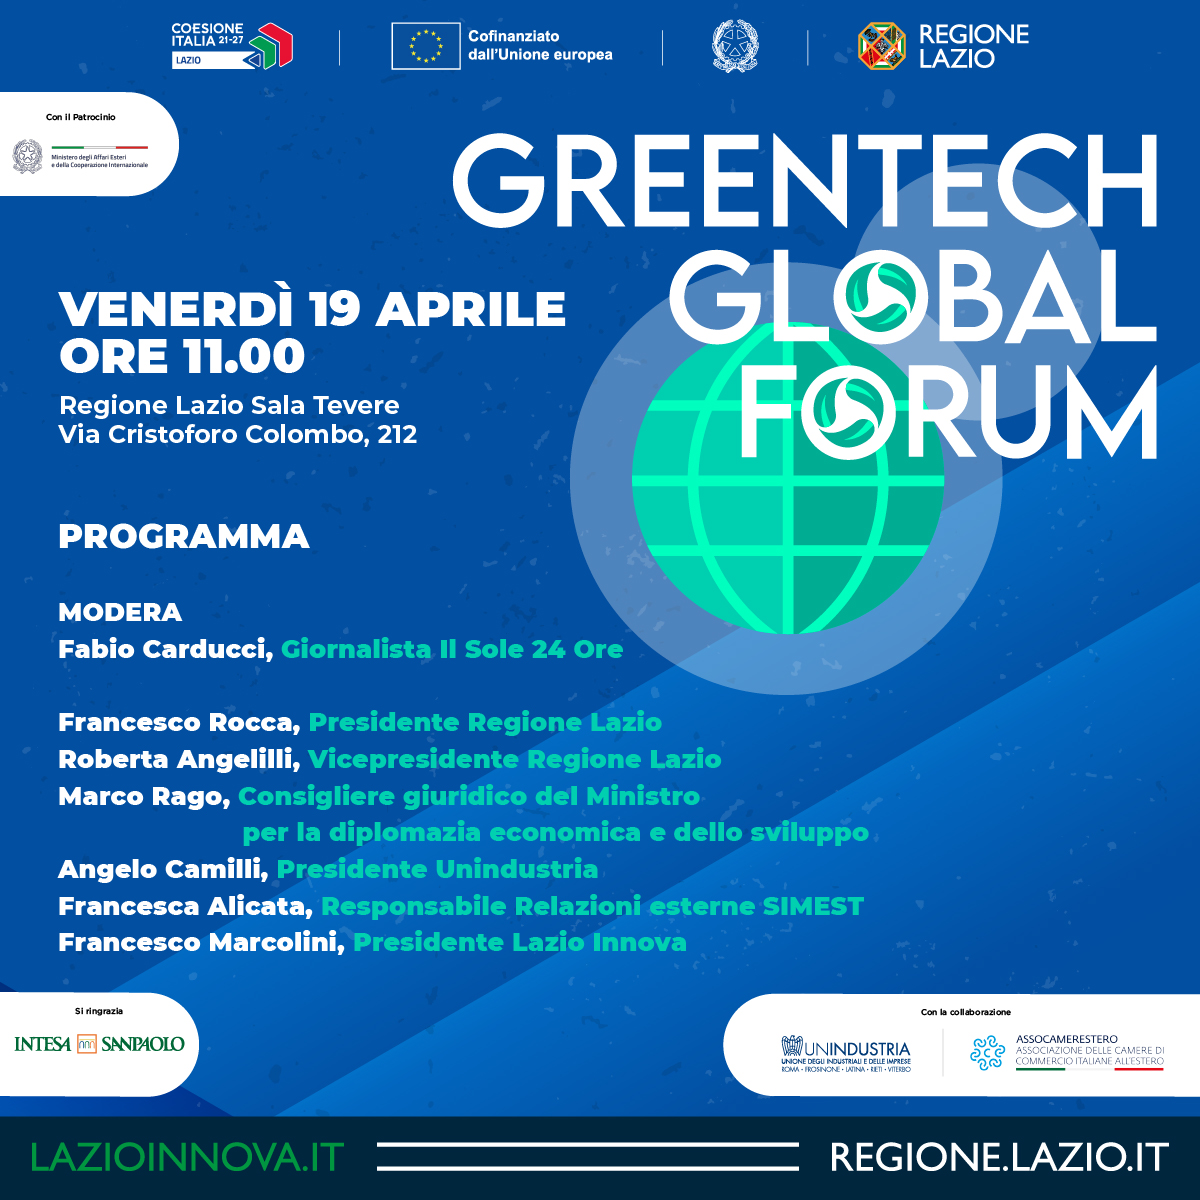 Presentazione GreenTech Global Forum. Info nella pagina